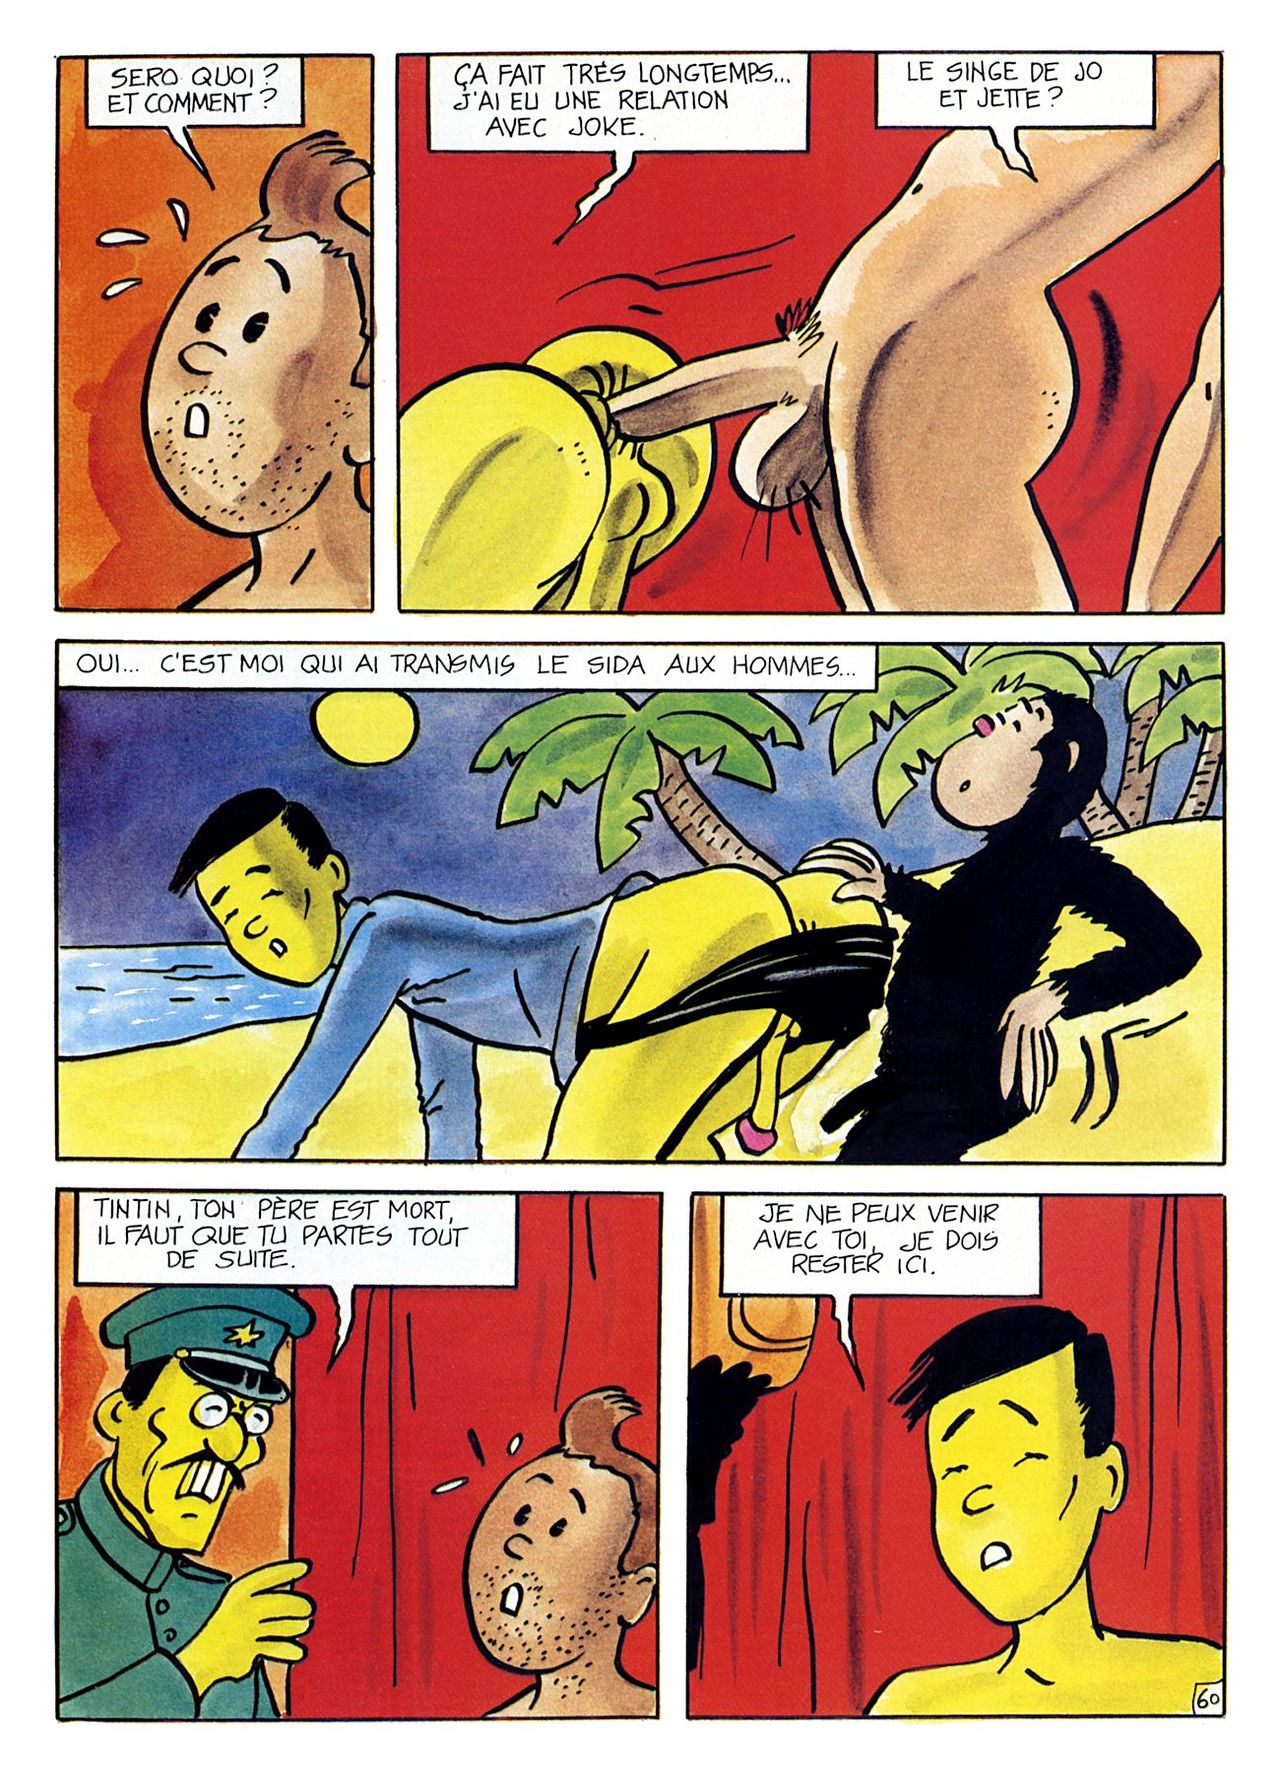 La Vie Sexuelle De Tintin numero d'image 63